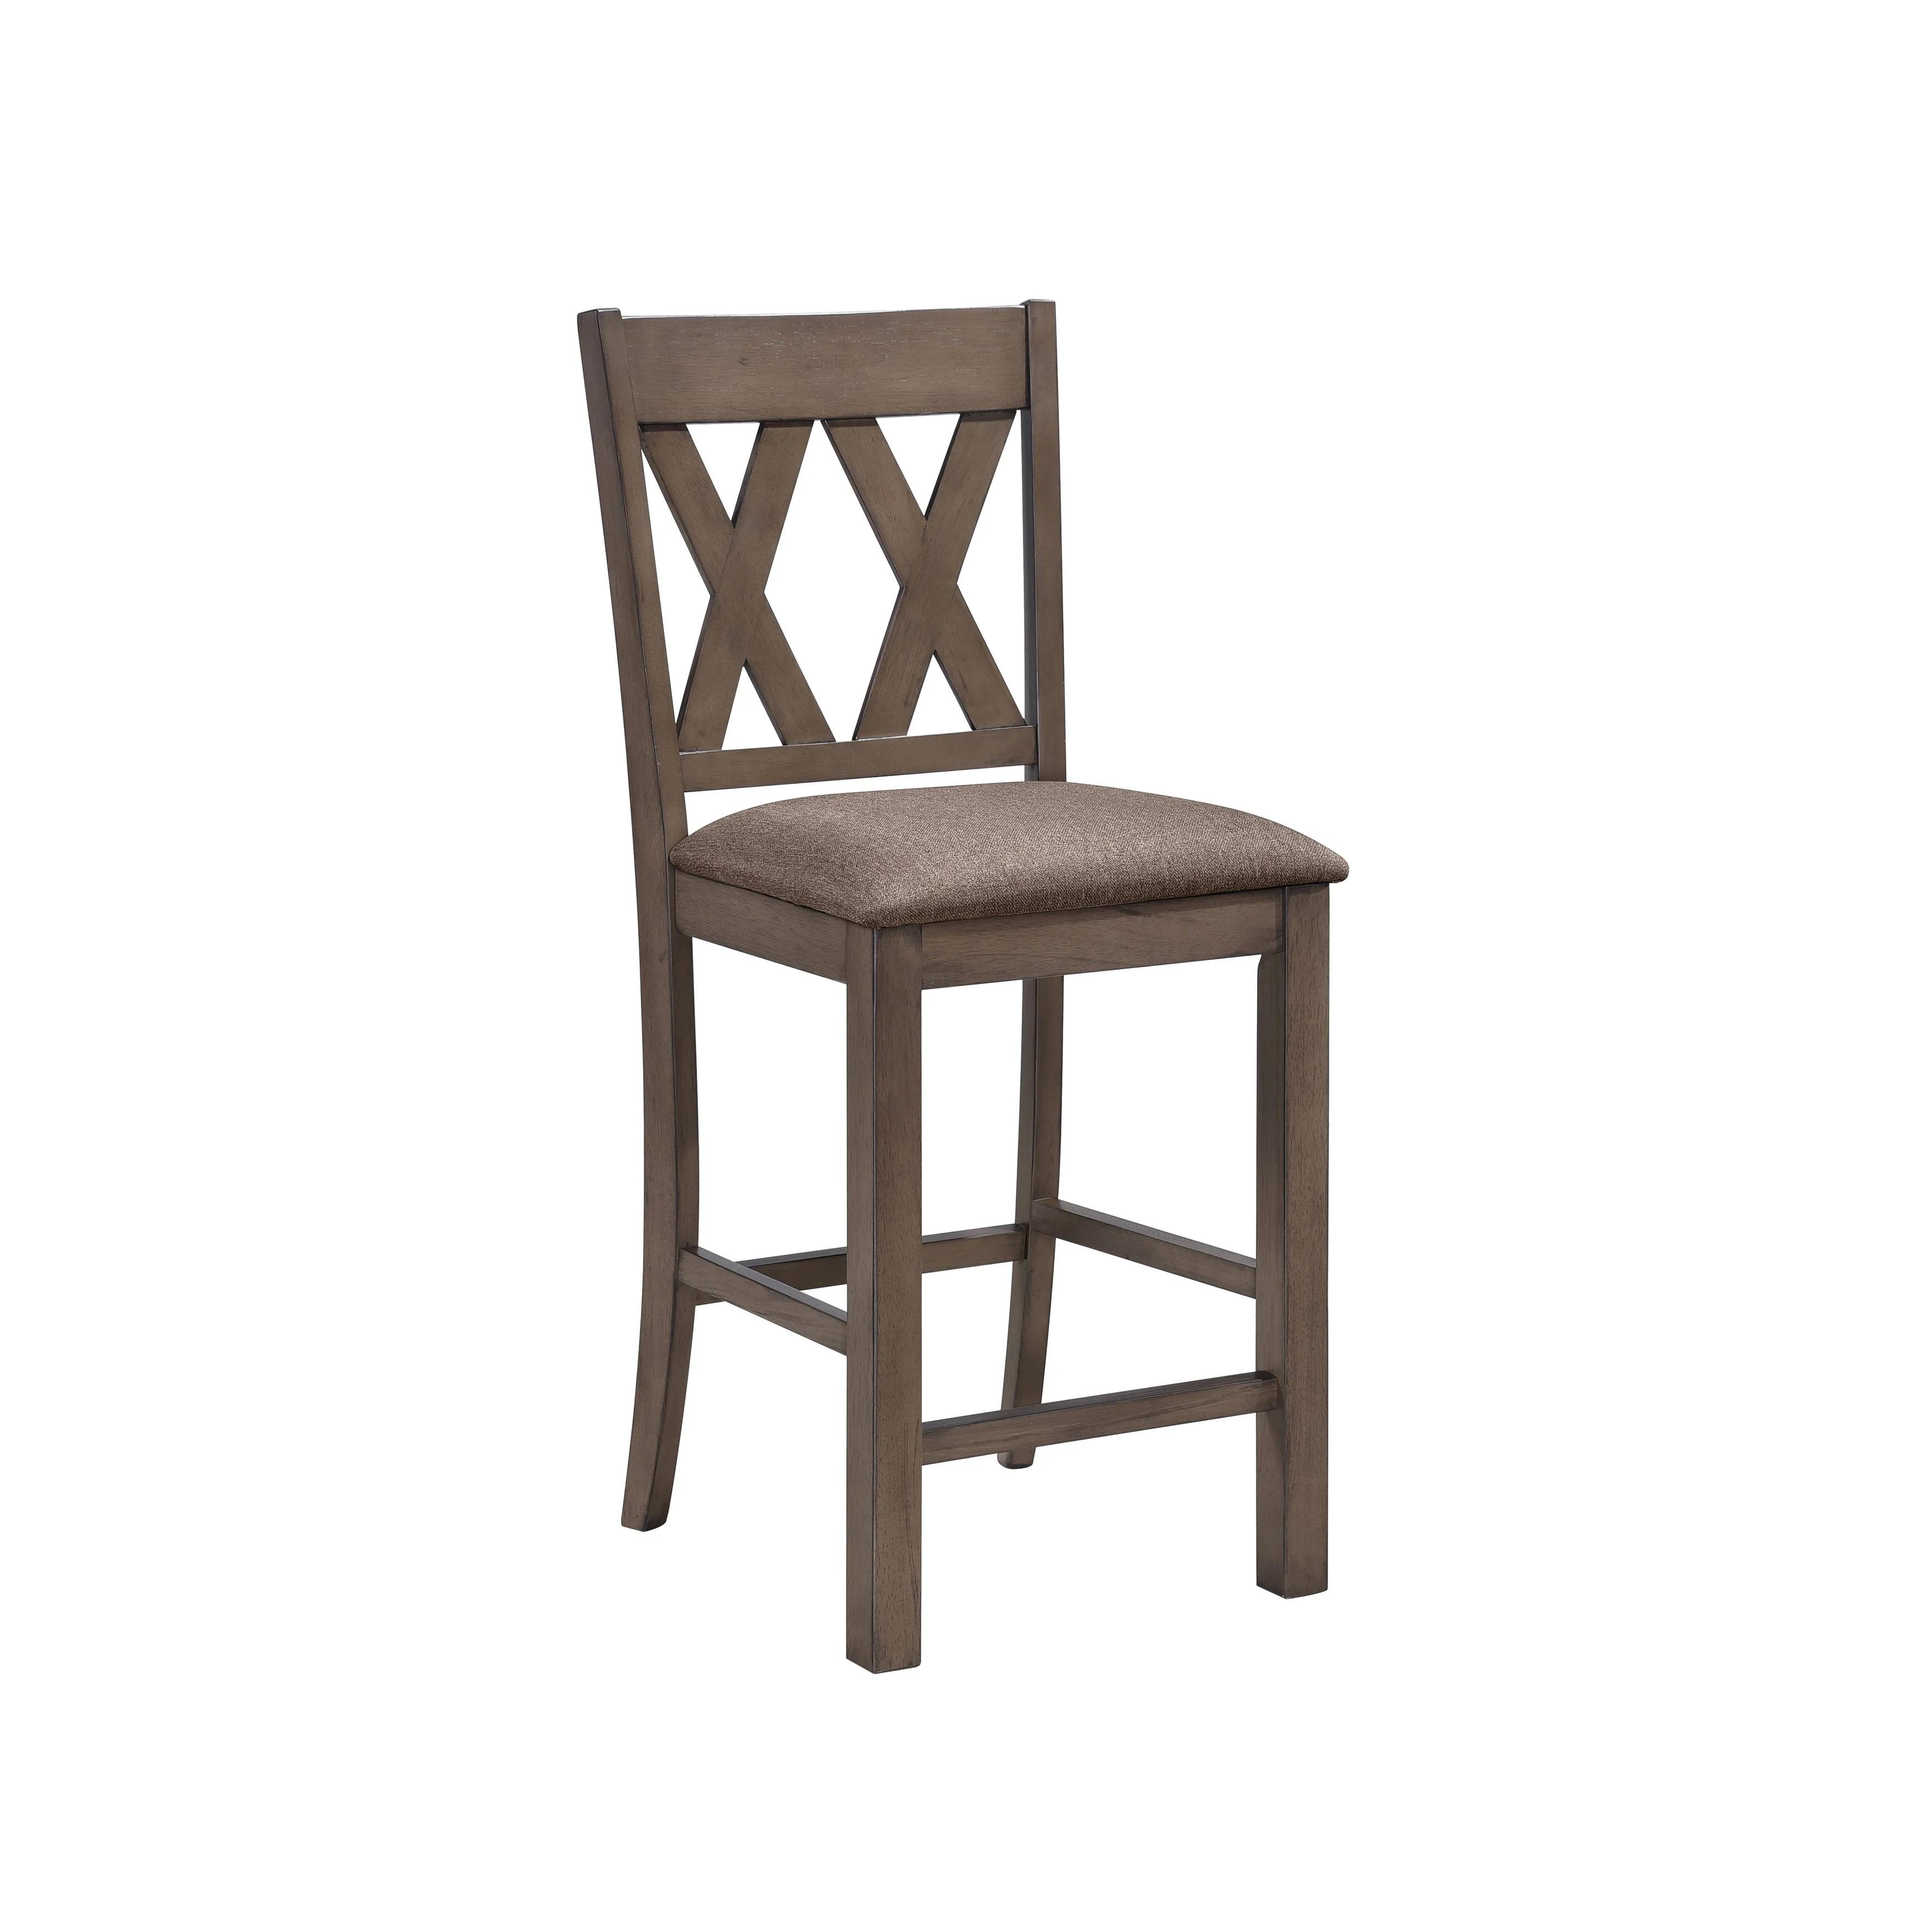 Acme Furniture Scarlett Counter Height Chair